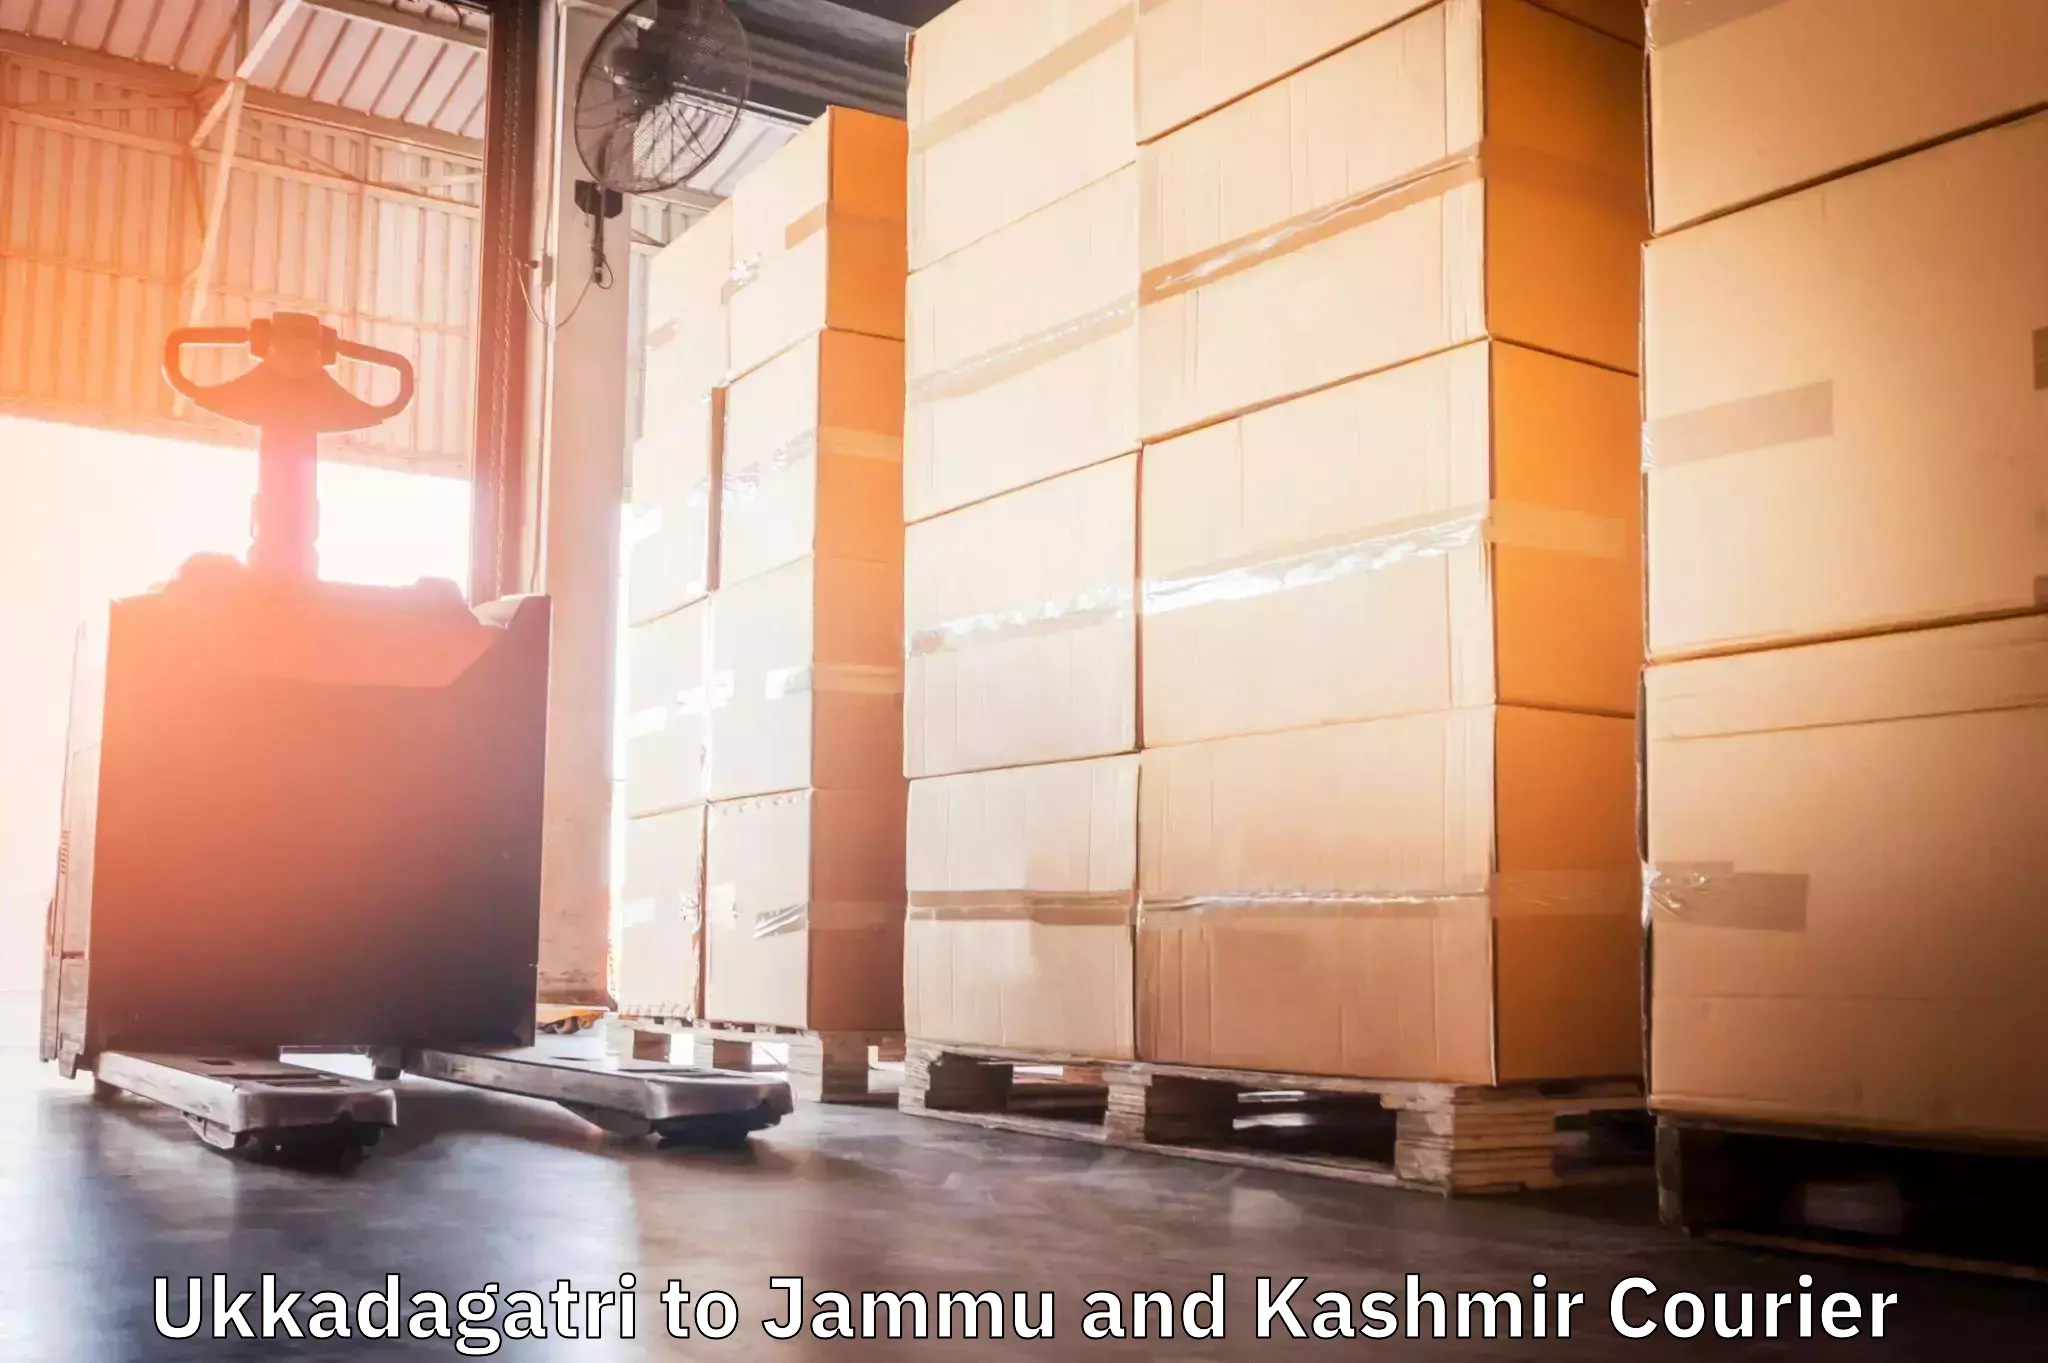 Cash on delivery service Ukkadagatri to Jammu and Kashmir